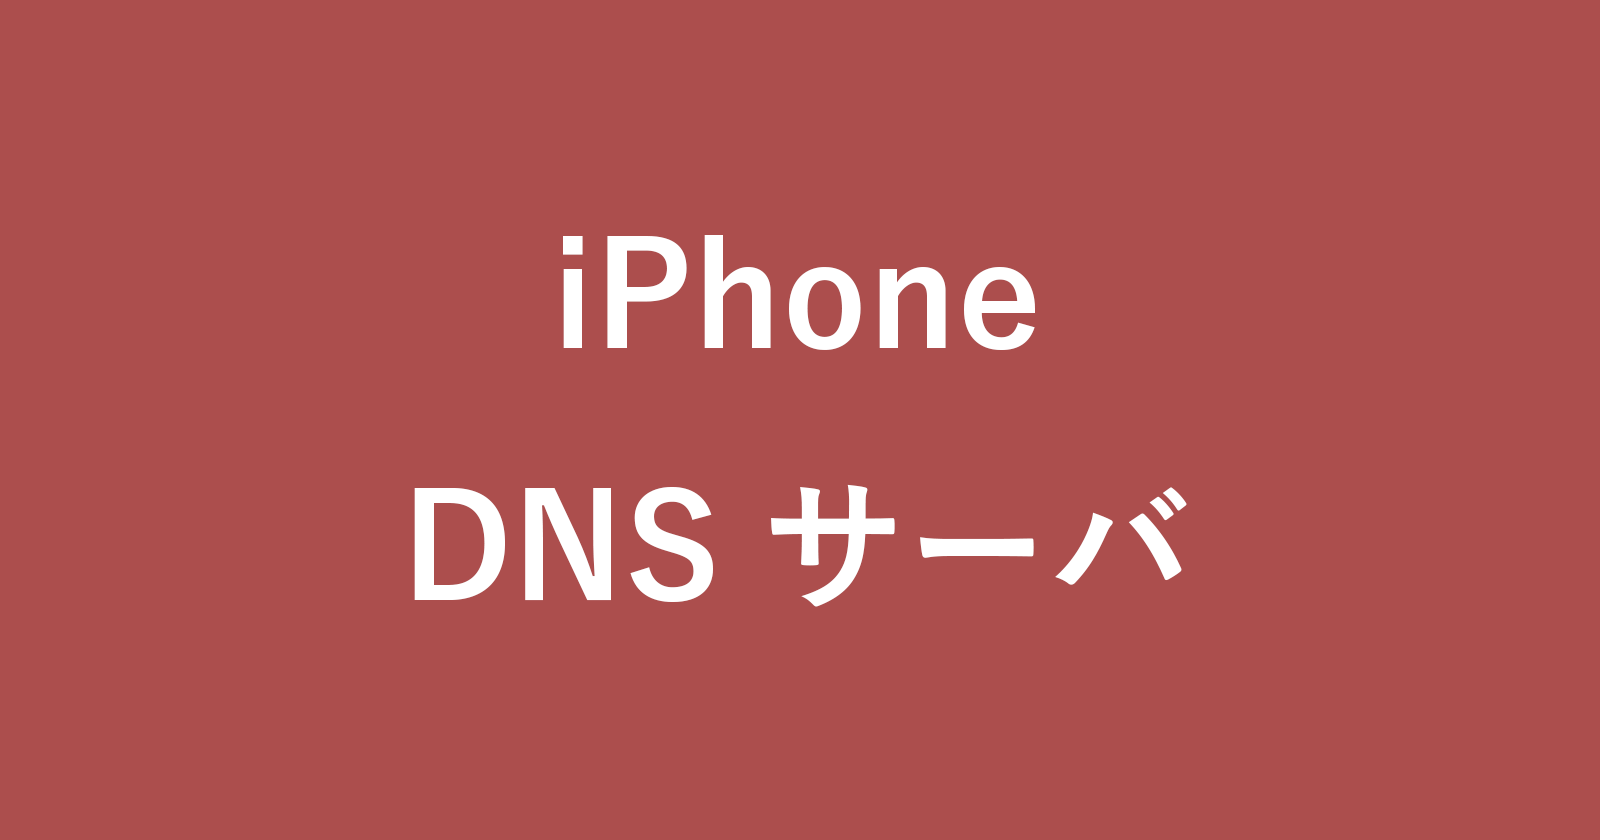 iphone dns server